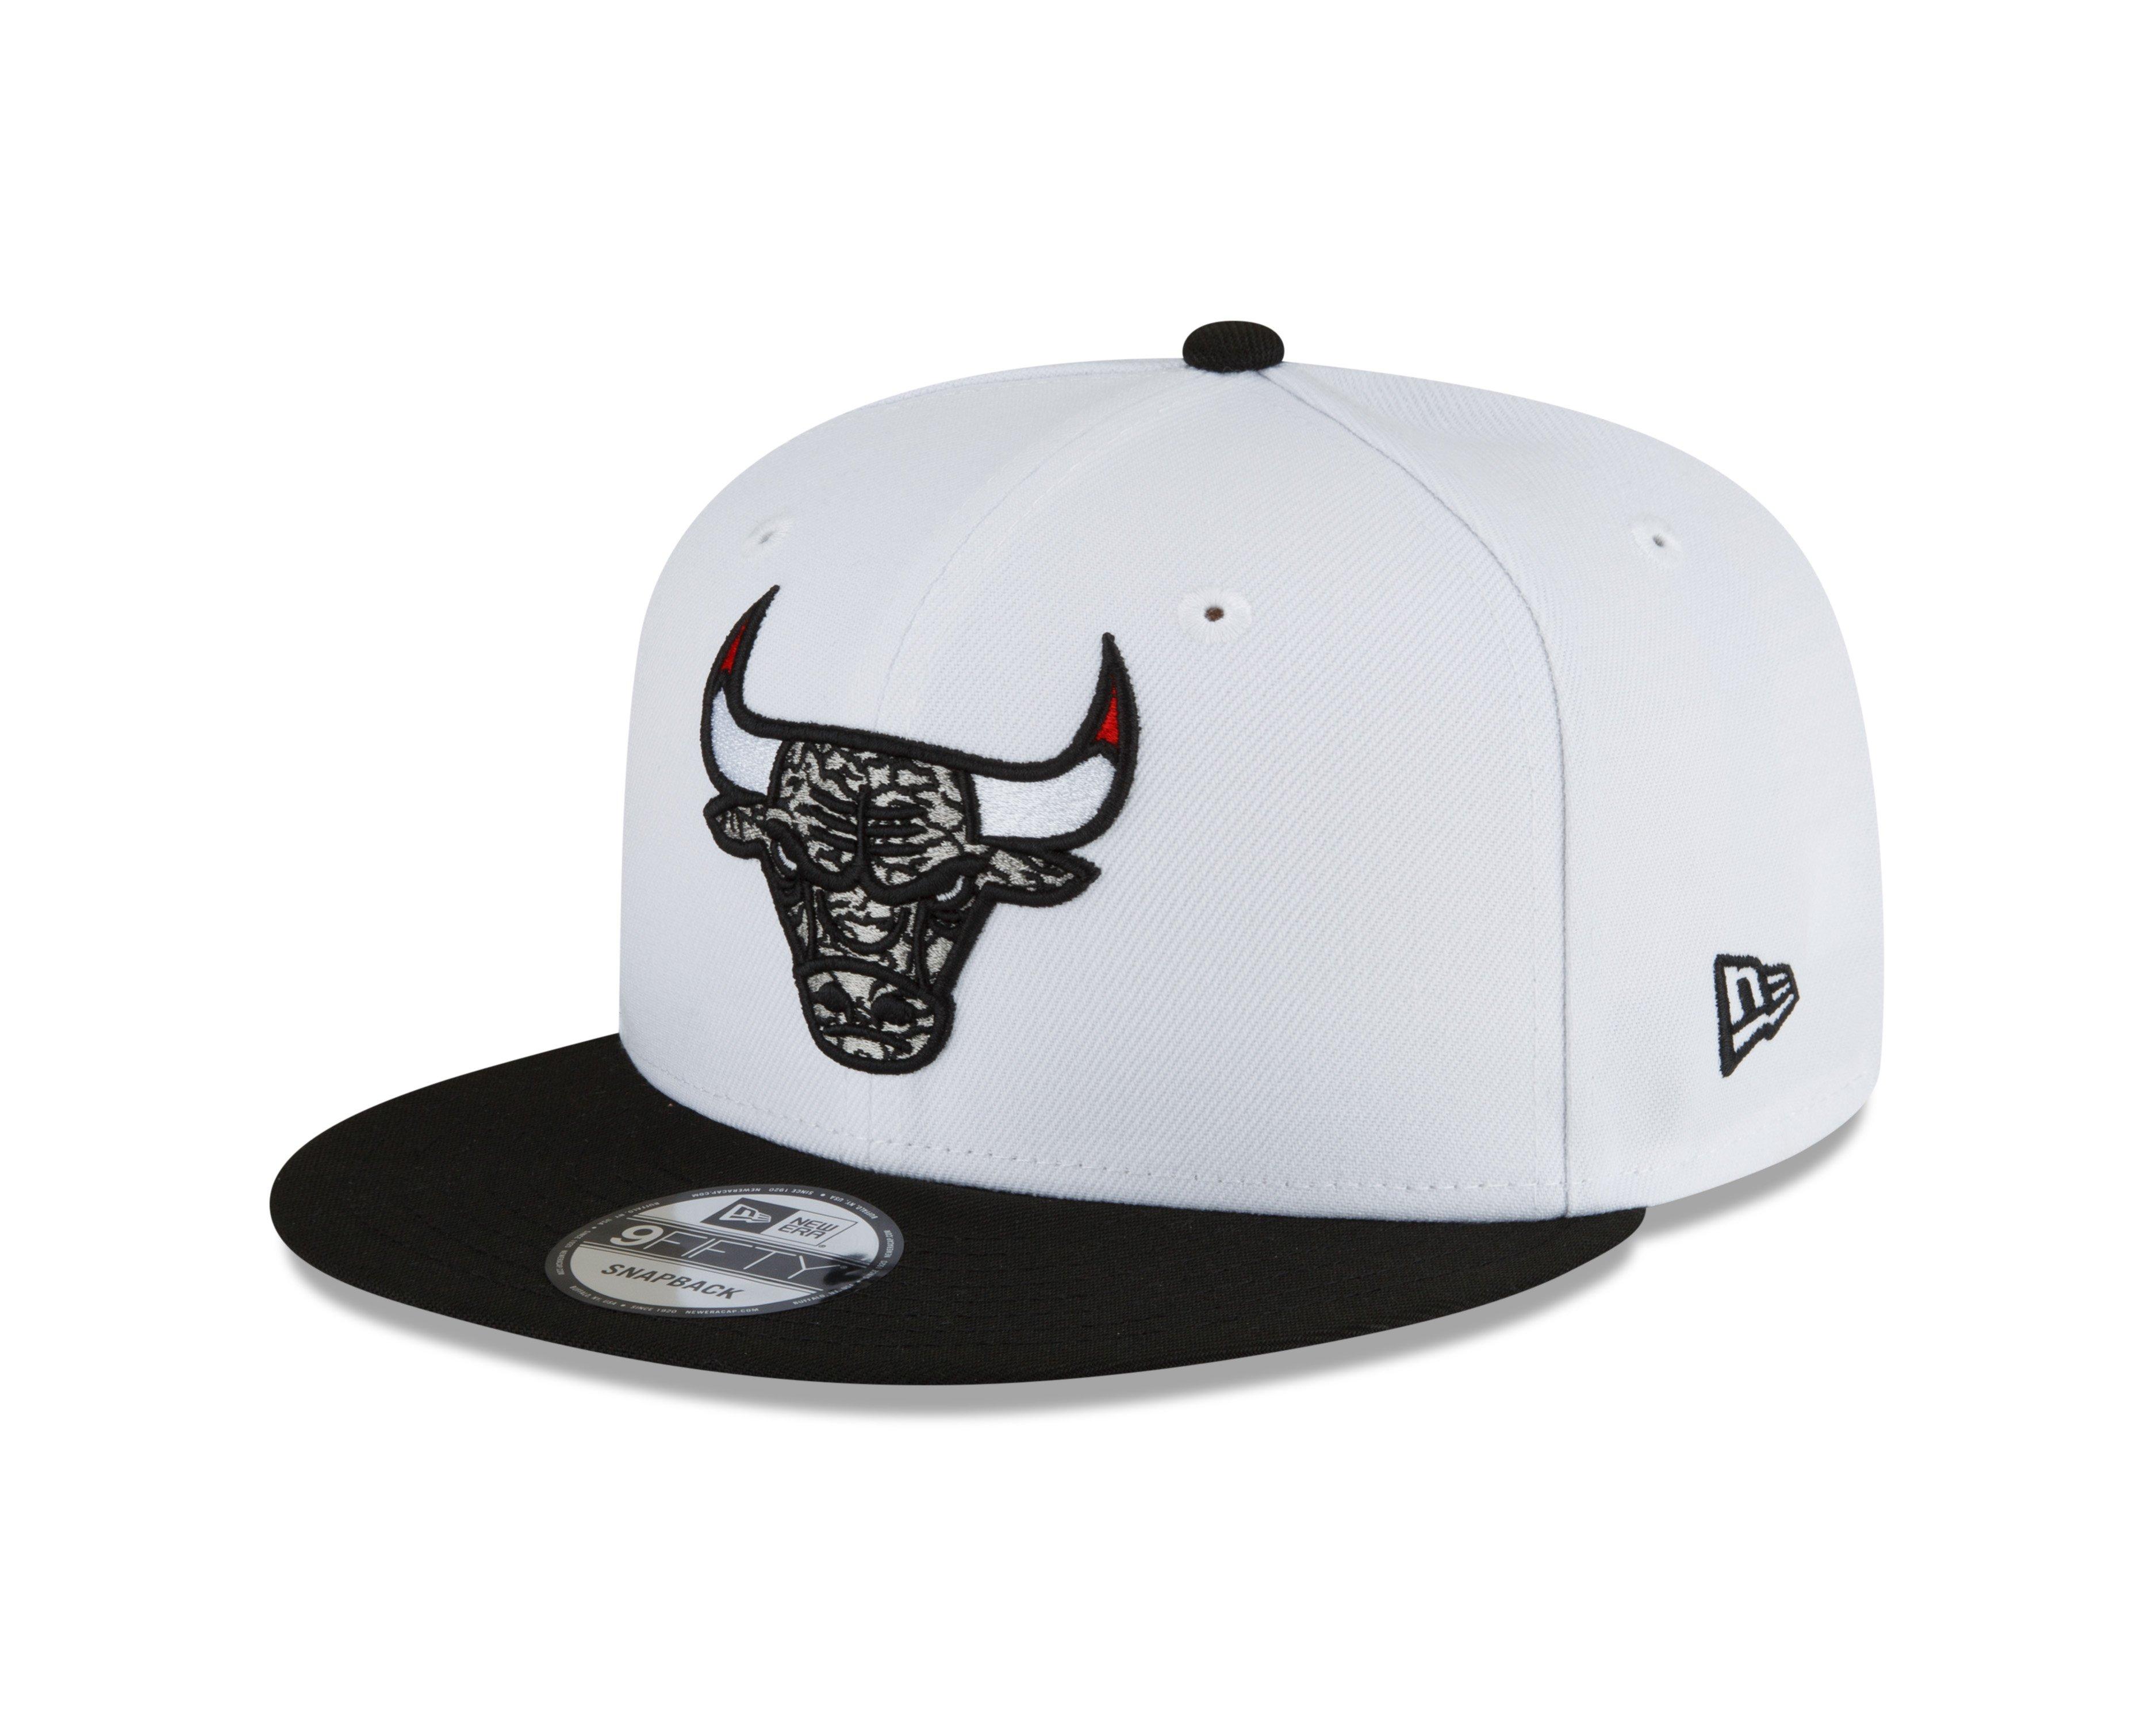  Mitchell & Ness Chicago Bulls Cool Grey Print Snapback Hat Cap  - 3 Retro Cool Grey : Sports & Outdoors